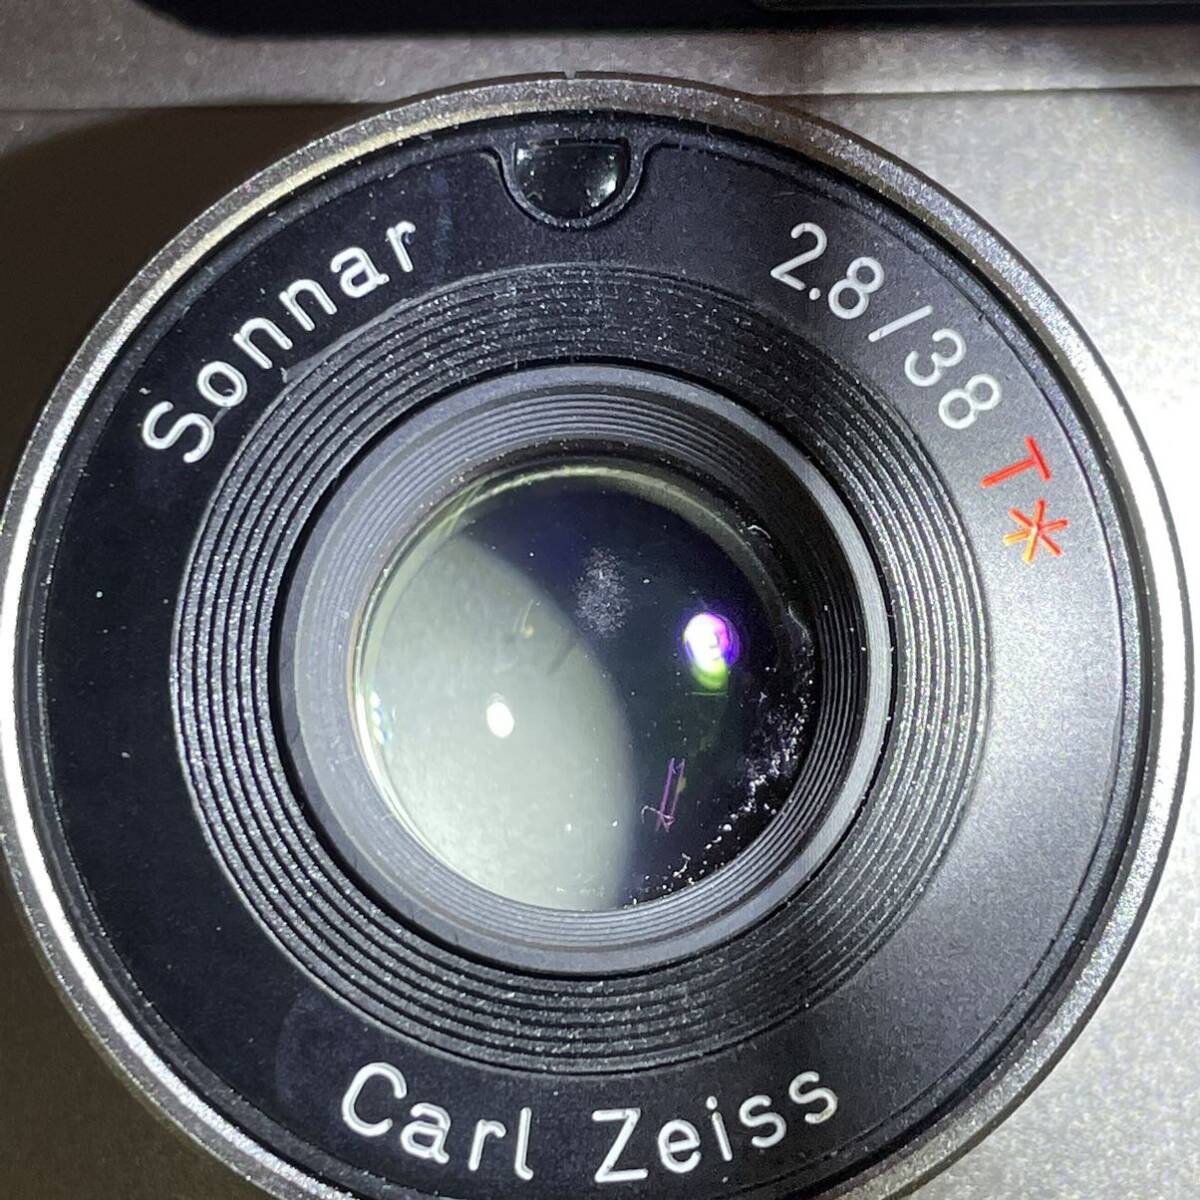 * CONTAX T2 compact film camera Carl Zeiss Sonnar 2.8/38 T* shutter, flash OK Contax 